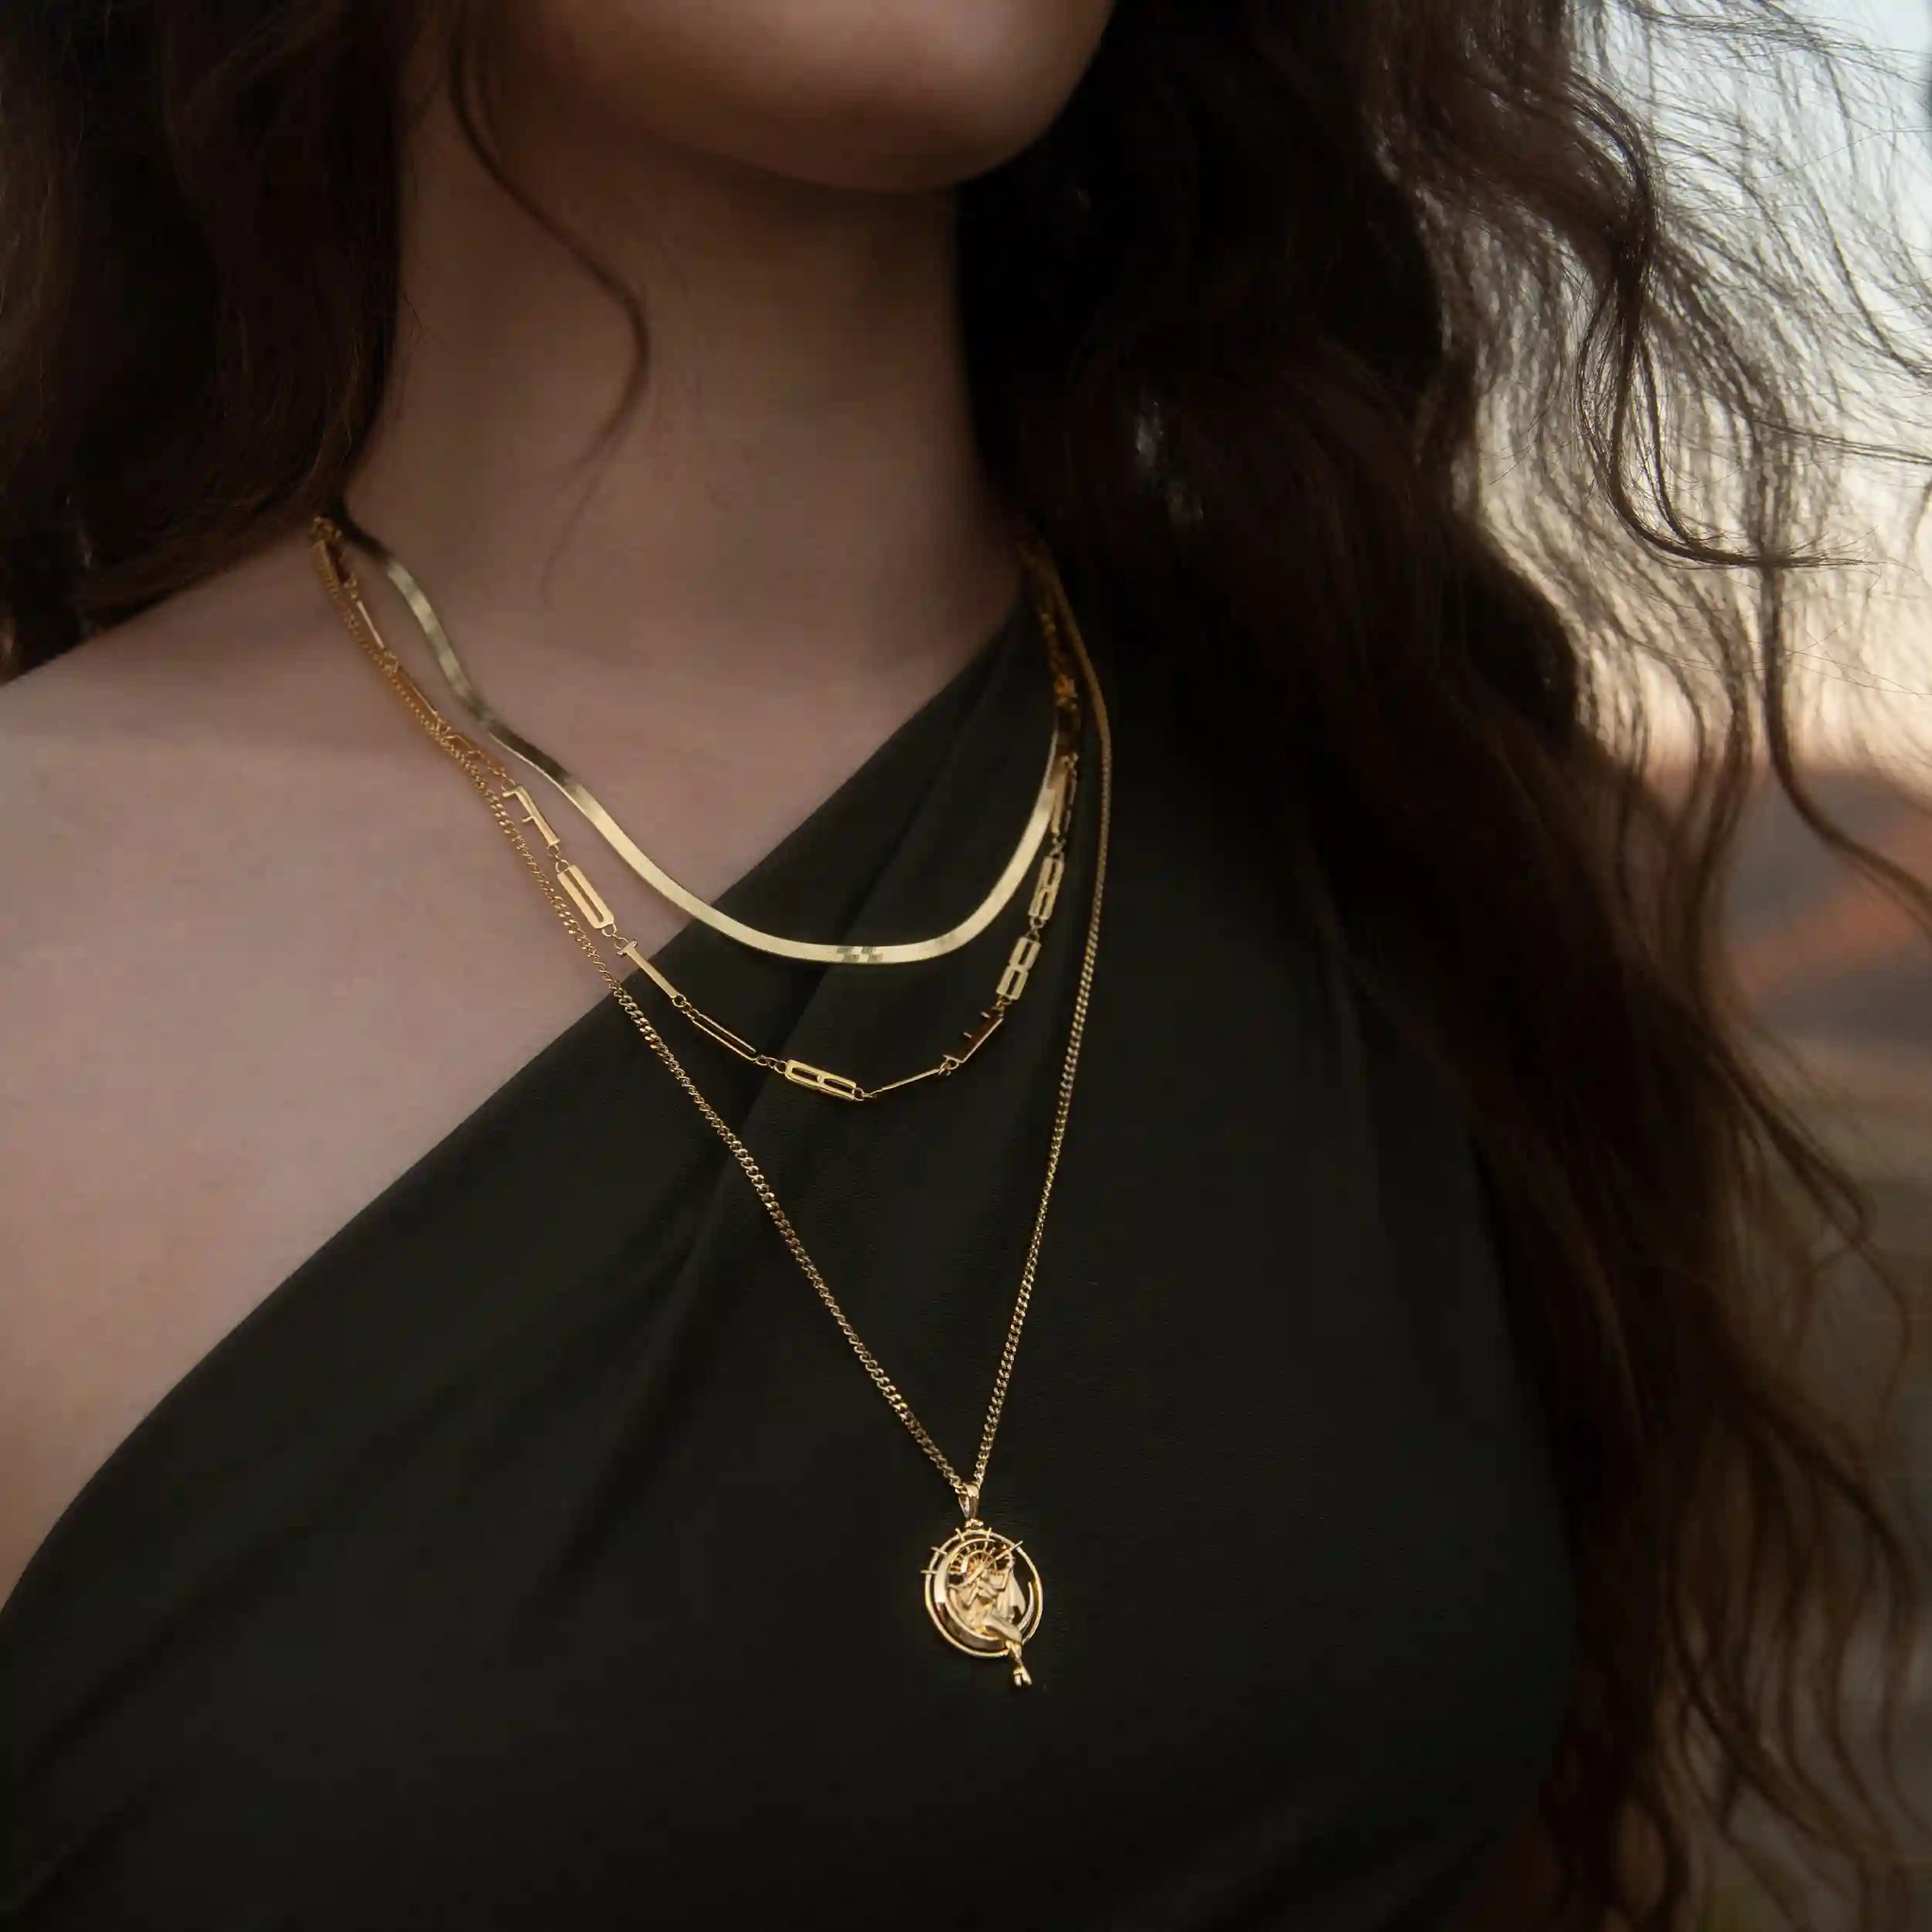 3mm Herringbone Chain Necklace | En Route Jewelry